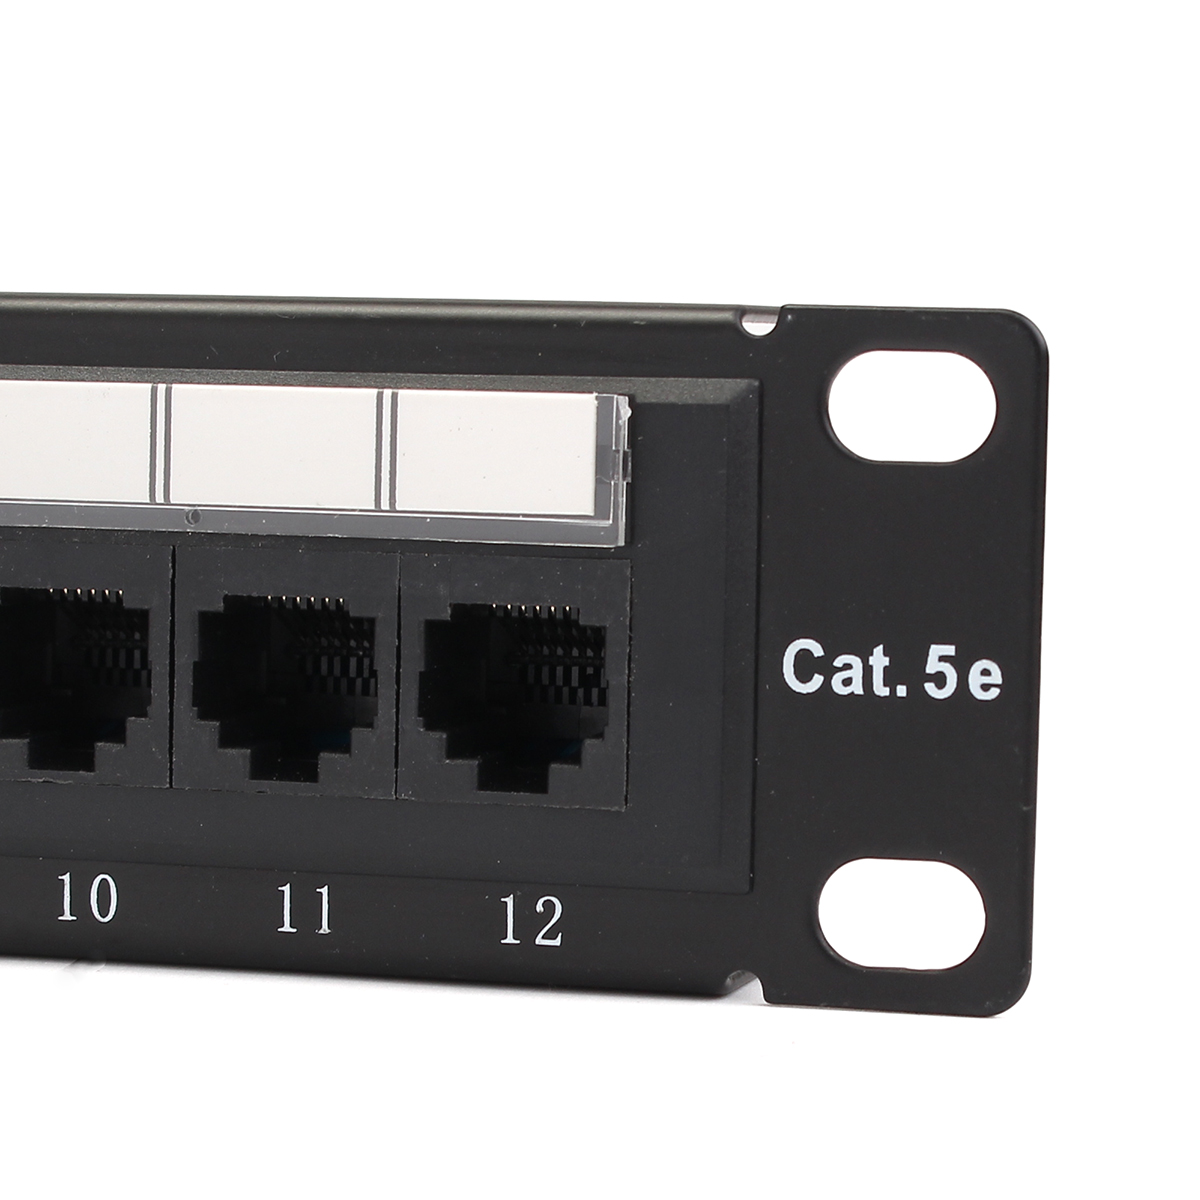 Cat6 12-port patch panel